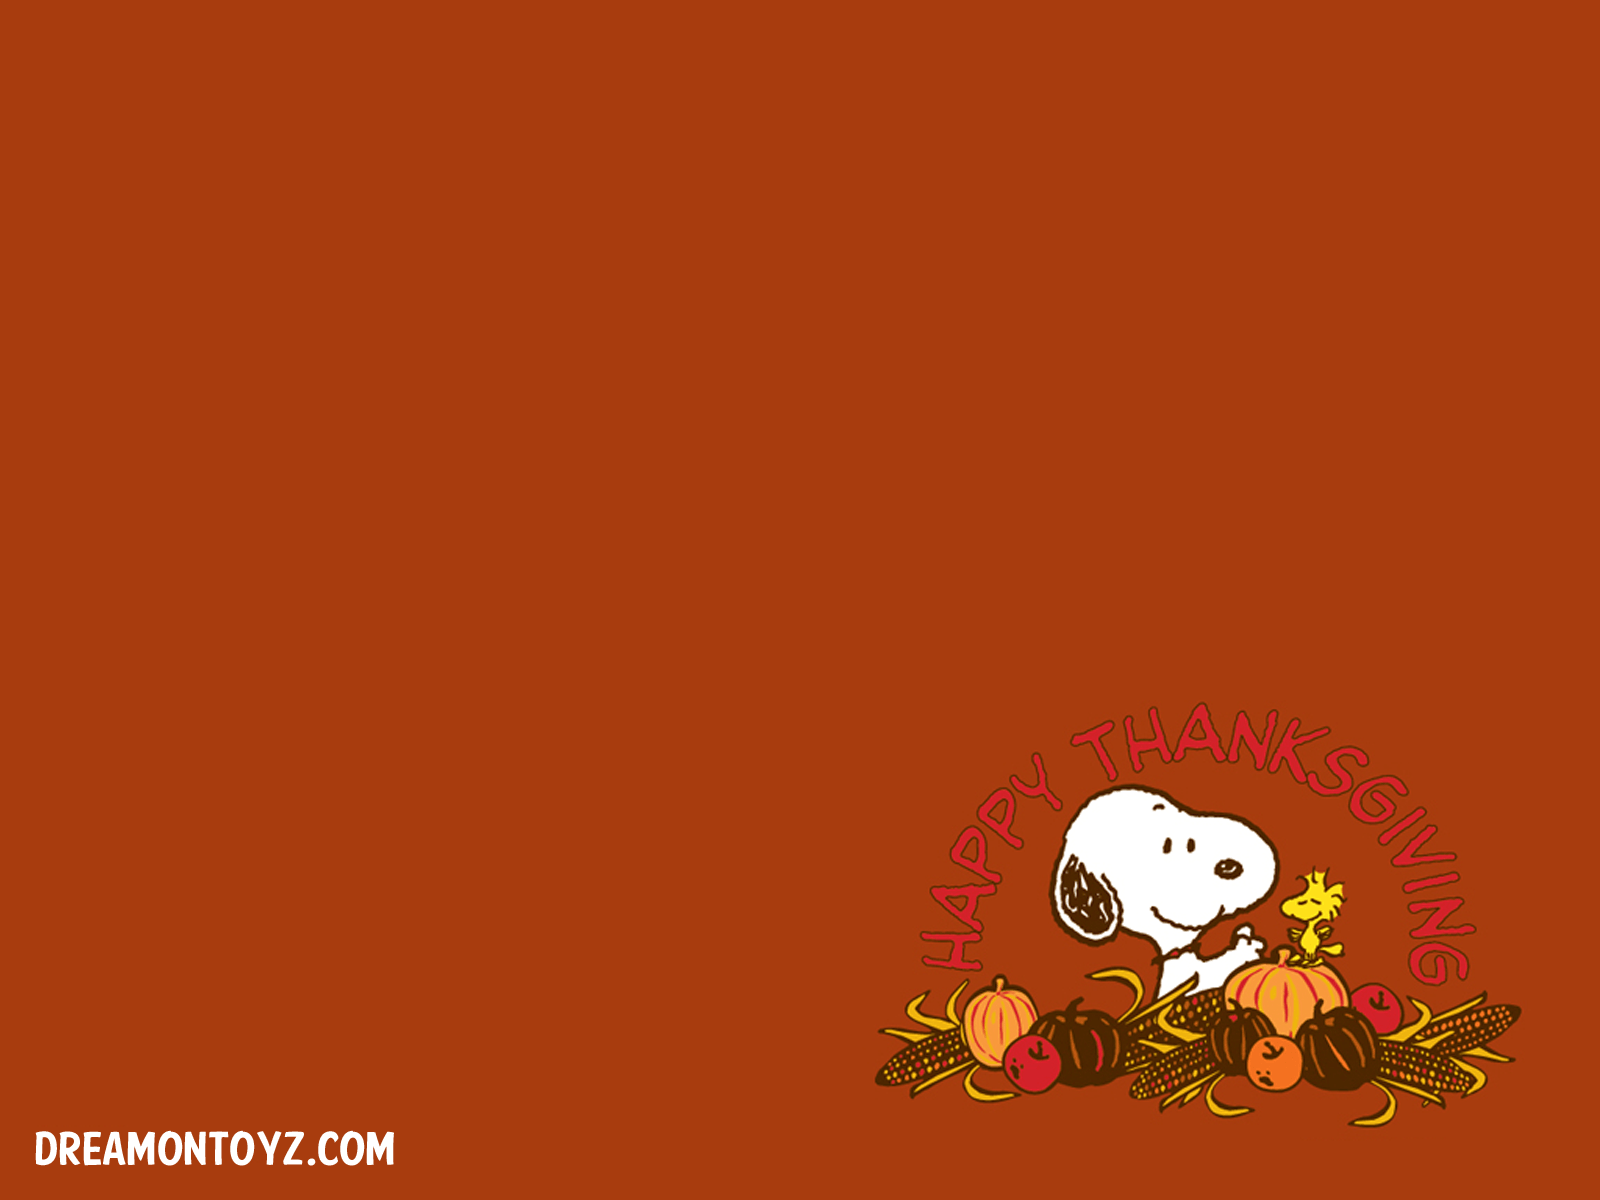 FREE Cartoon Graphics / Pics / Gifs / Photographs: Peanuts Snoopy Thanksgiving wallpaper. Snoopy wallpaper, Thanksgiving wallpaper, Peanuts wallpaper